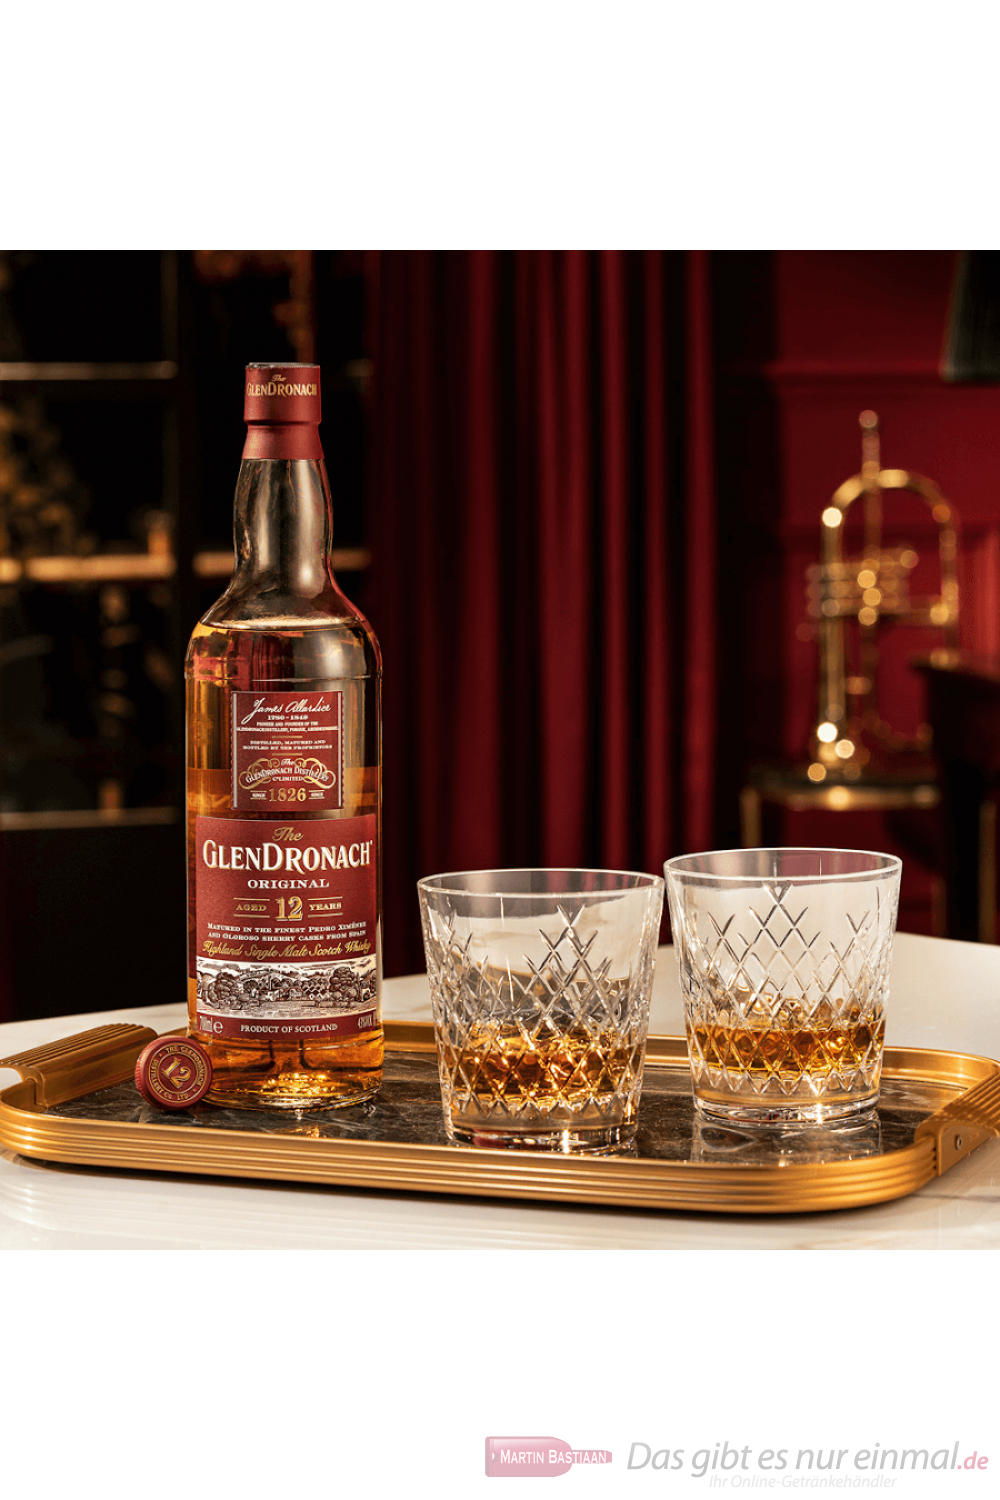 Years 12 Whisky Malt Scotch Glendronach 43% 0,7l